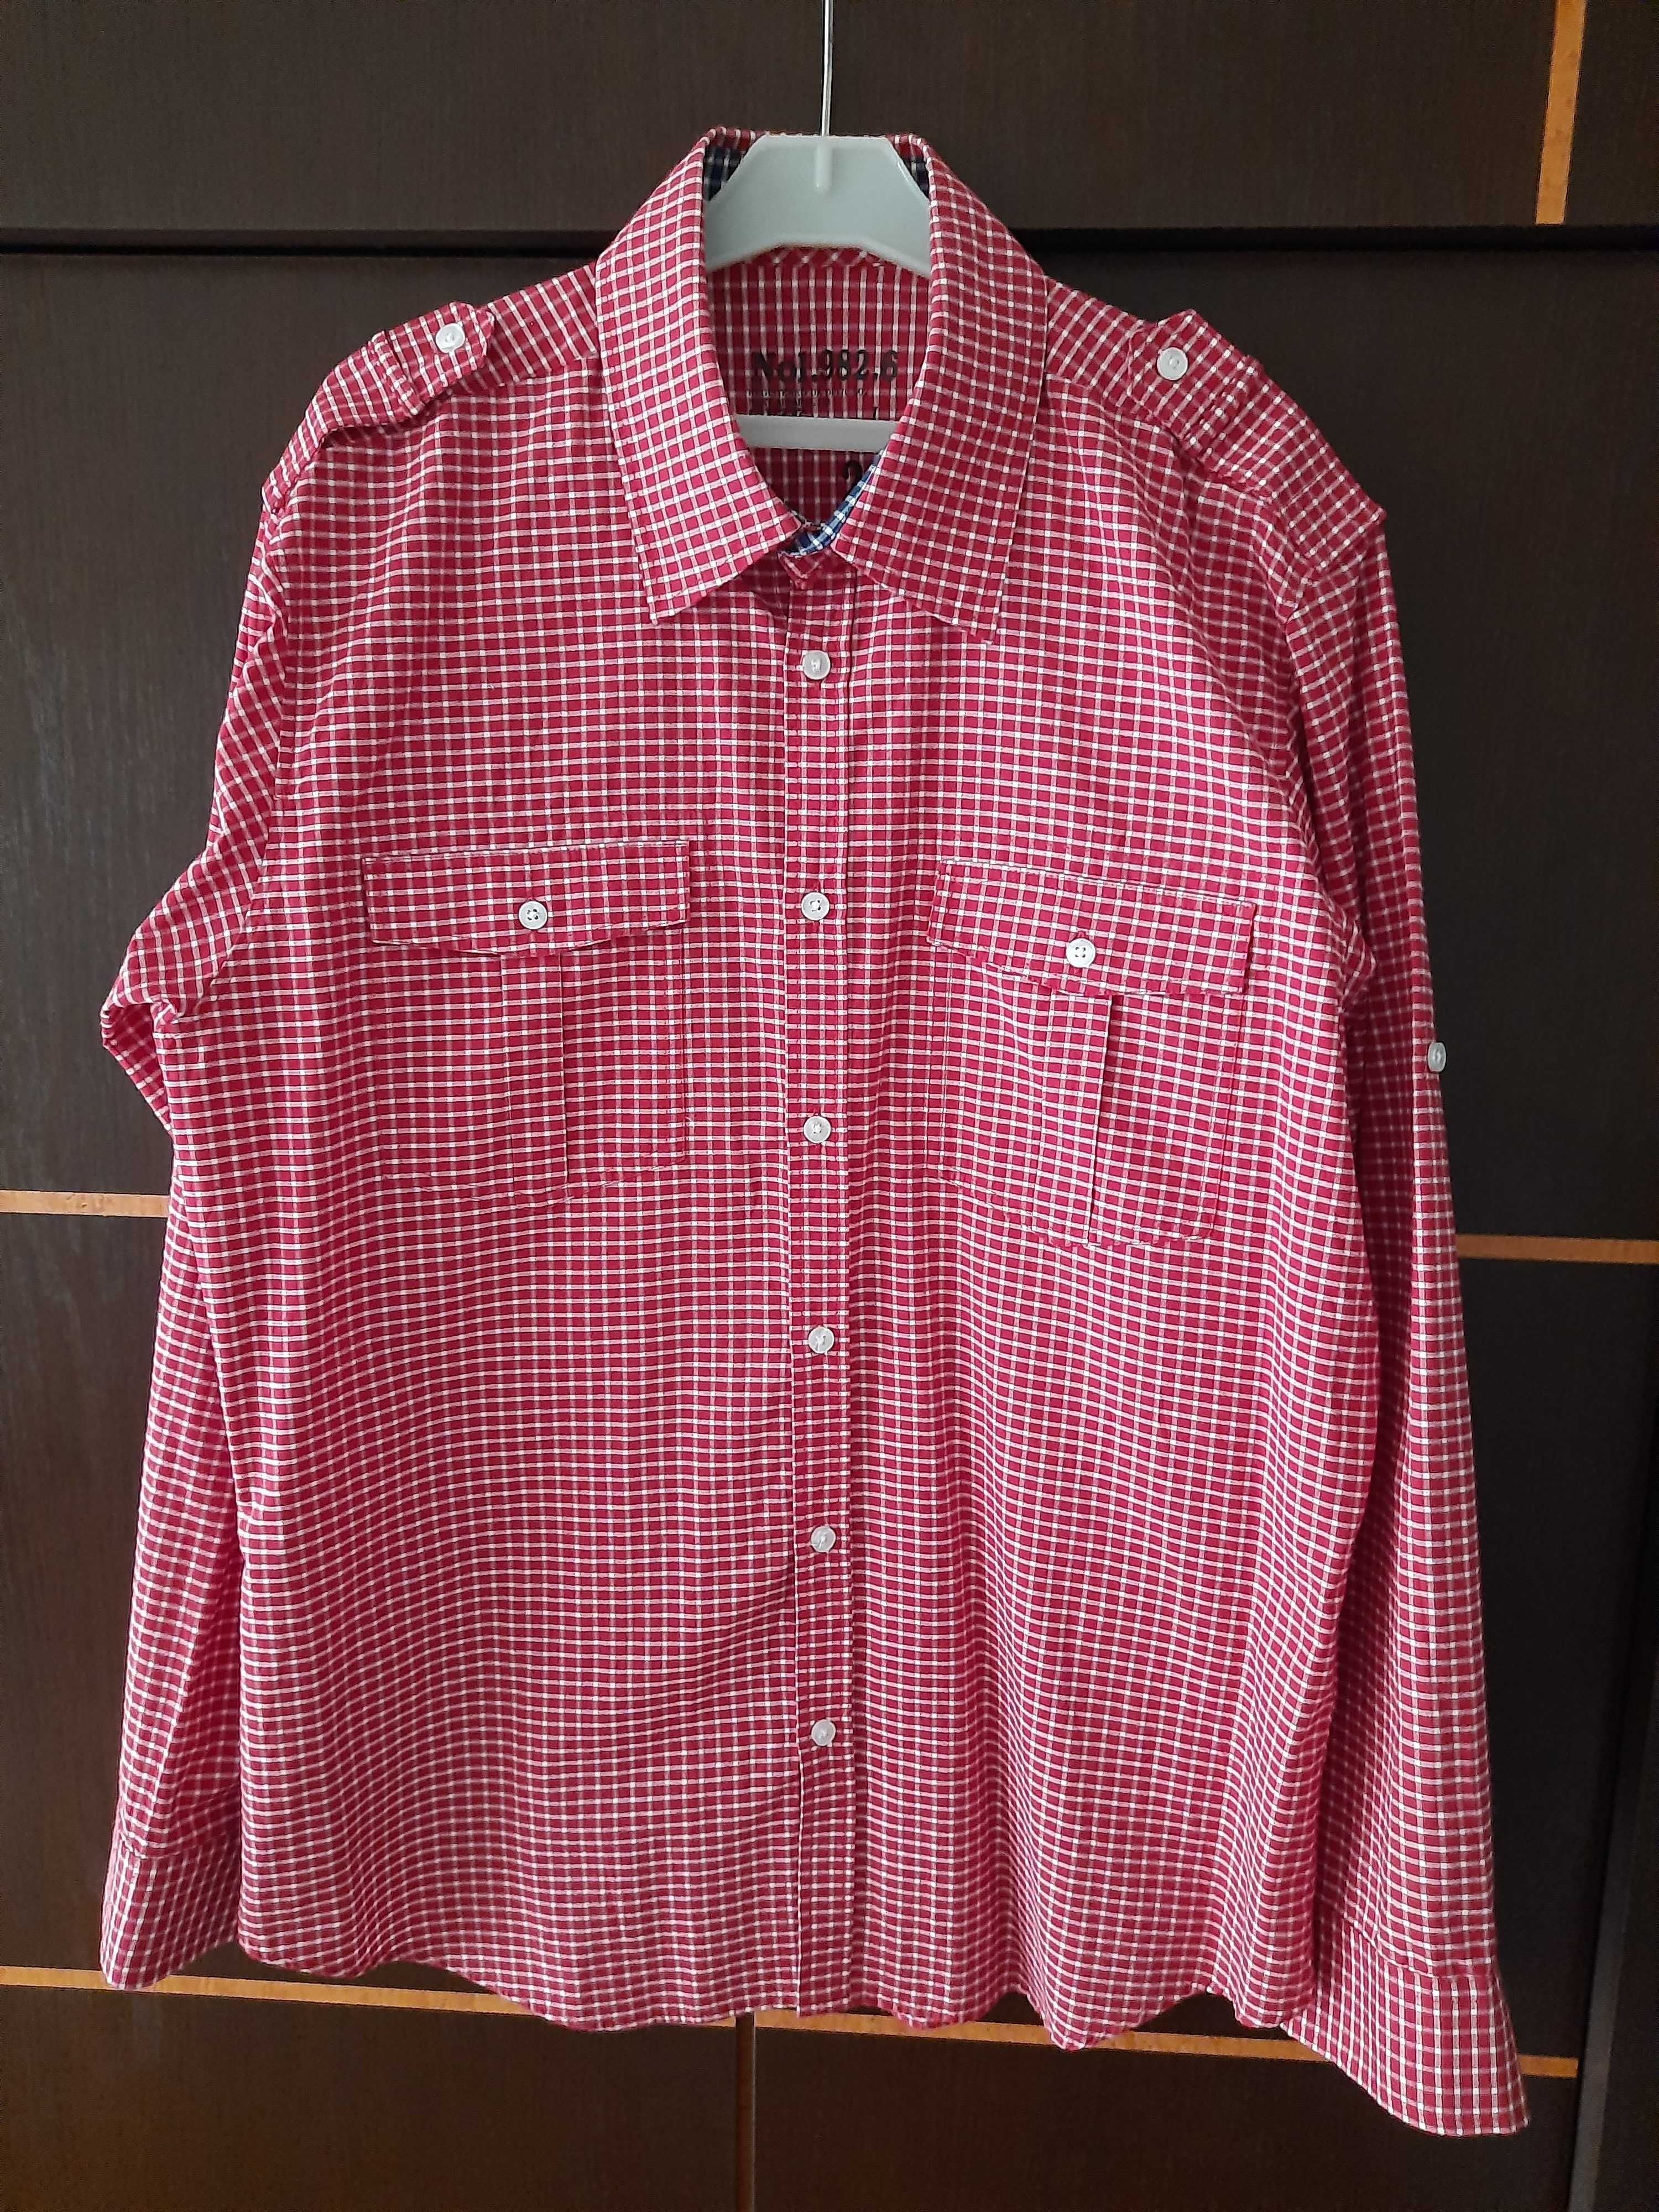 Koszula męska w kratę marki NEXT roz. L